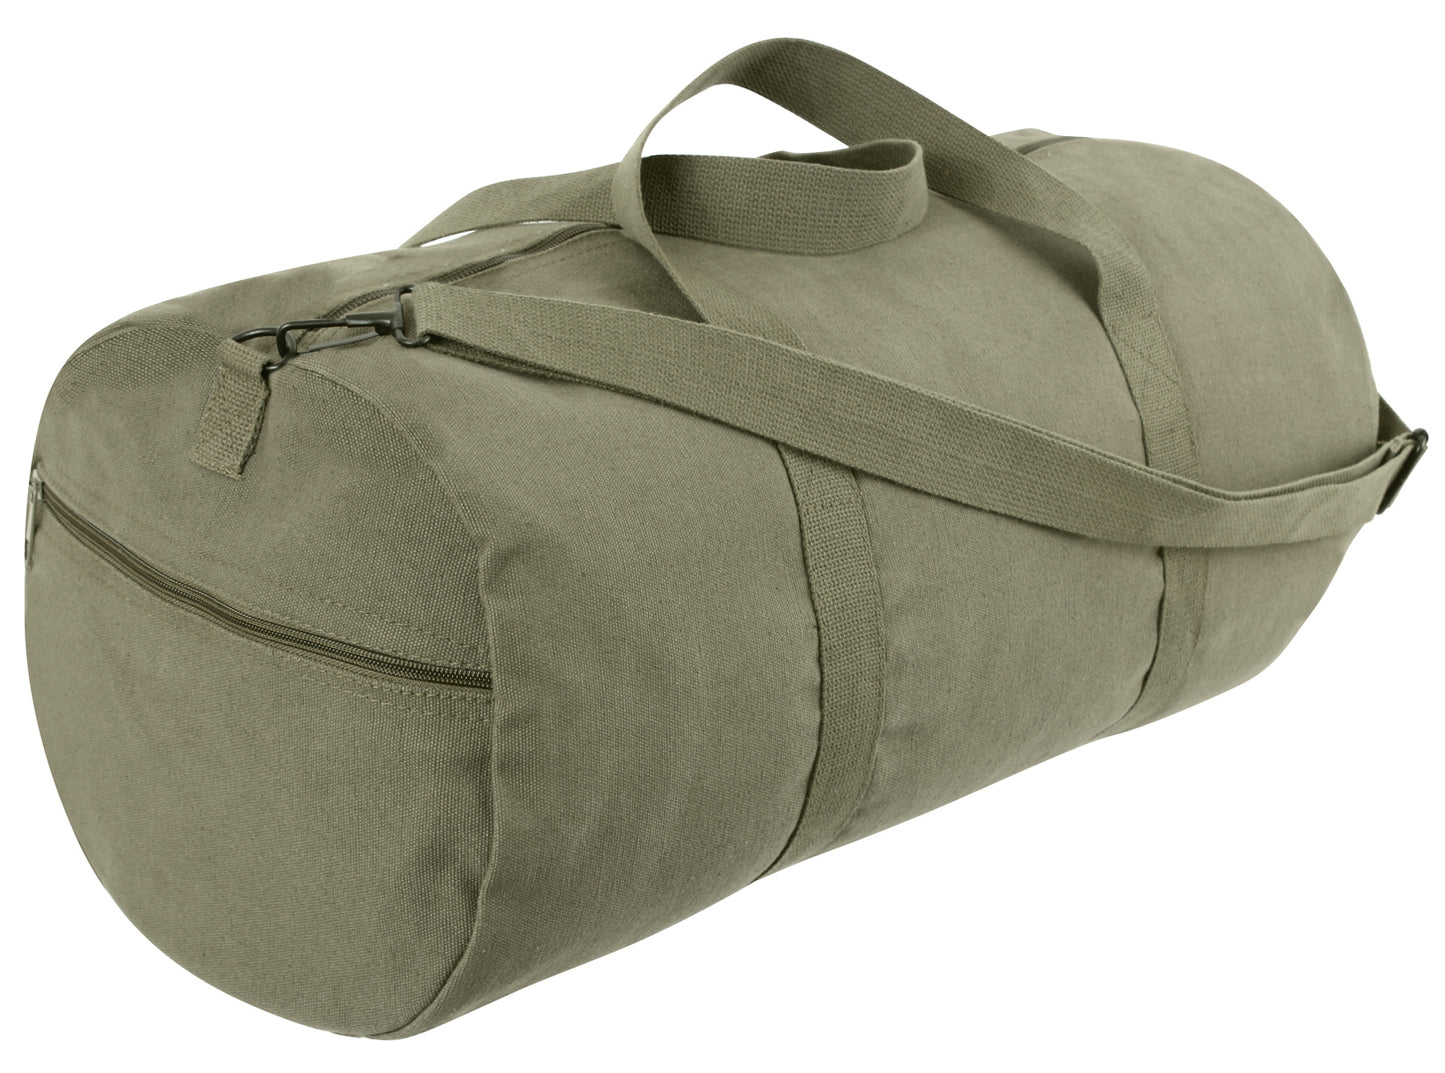 Milspec Canvas Shoulder Duffle Bag - 24 Inch Messenger & Shoulder Bags MilTac Tactical Military Outdoor Gear Australia